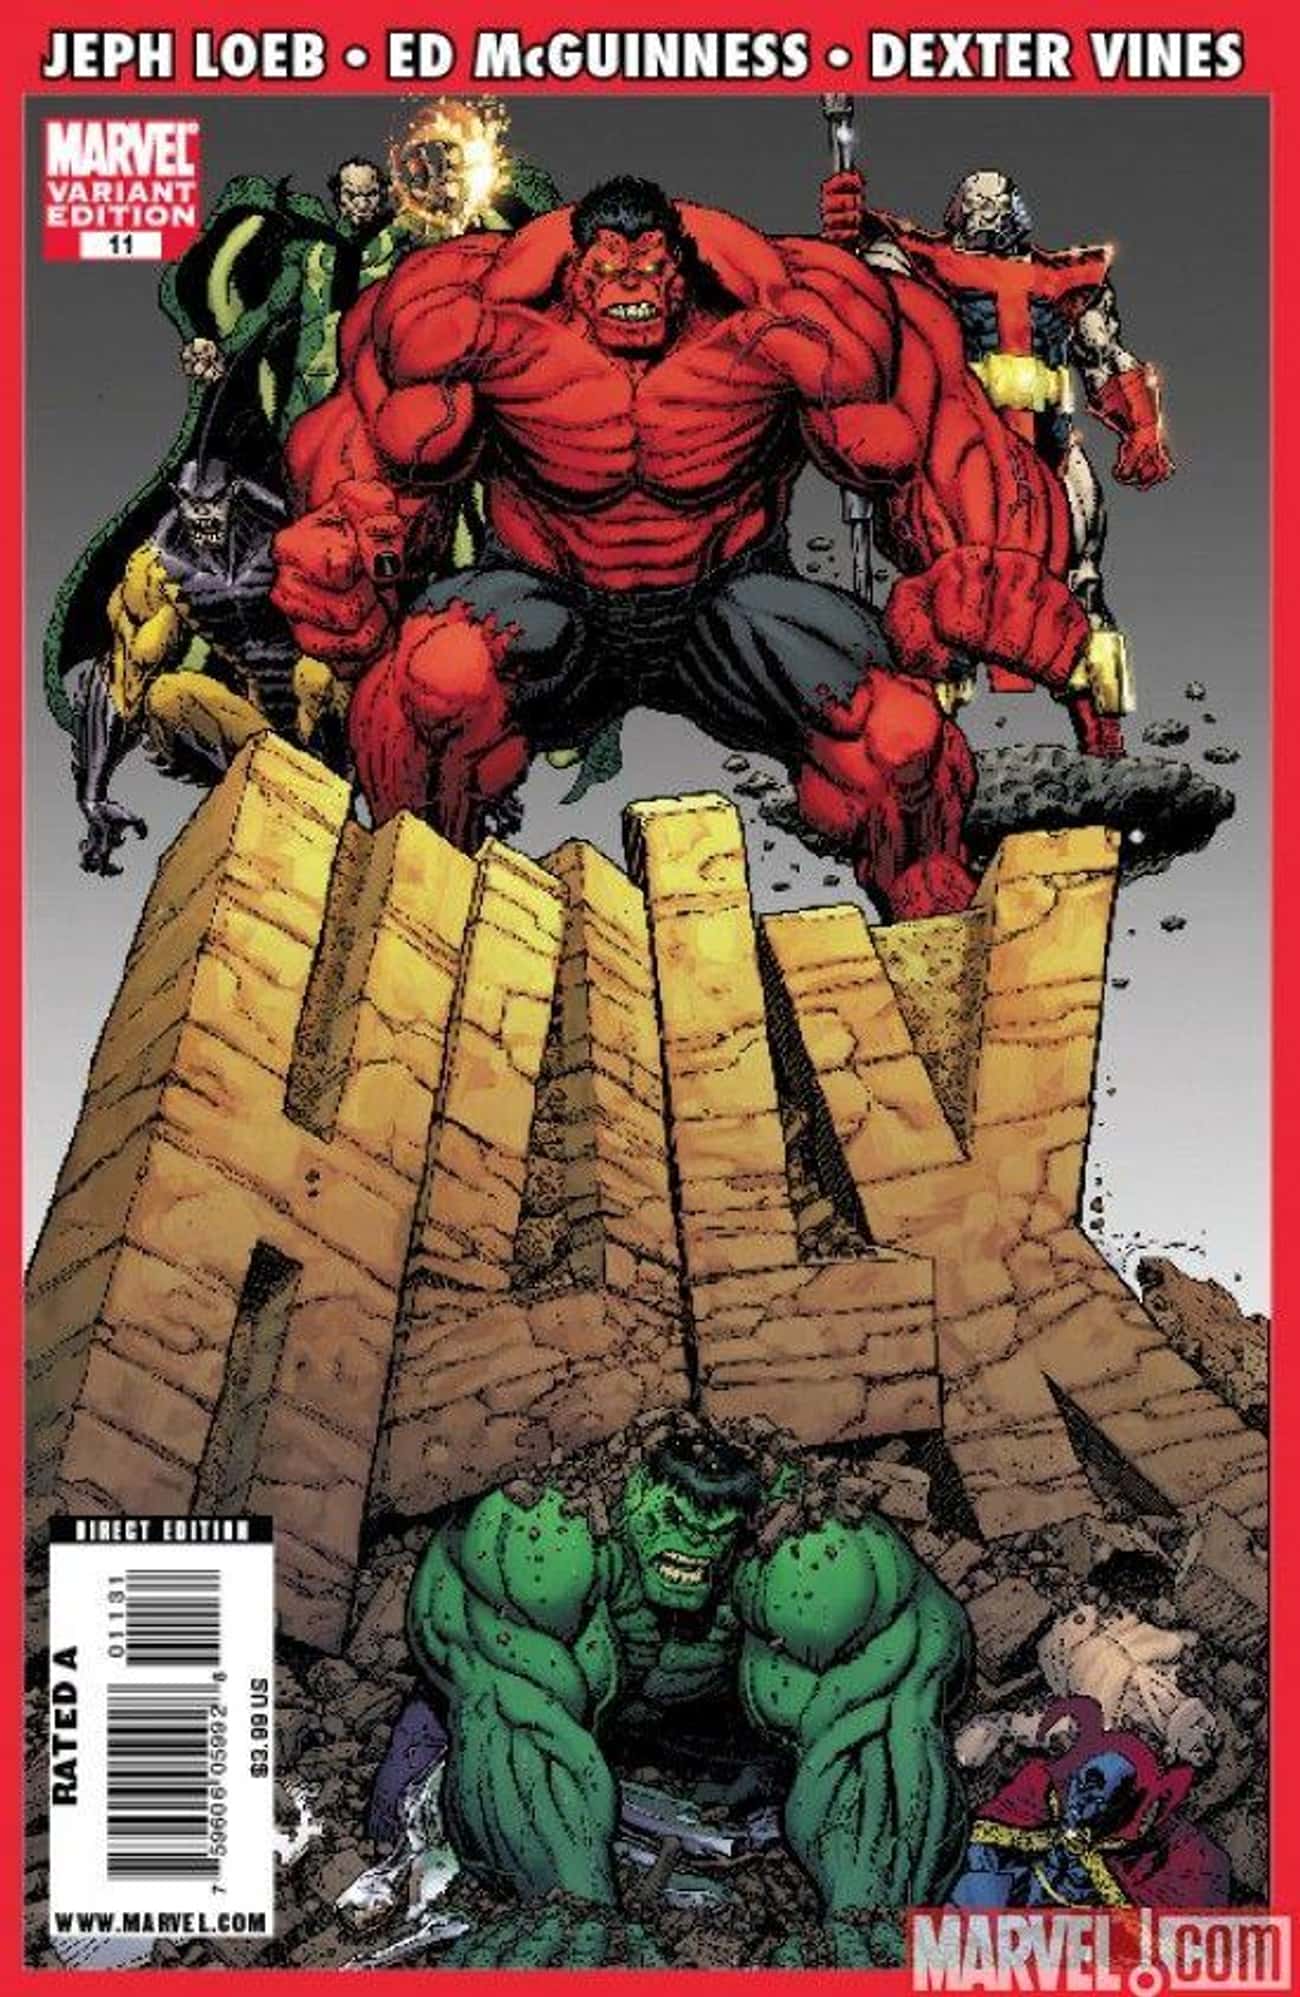 Hulk vs. Red Hulk in Hulk #4 and #11